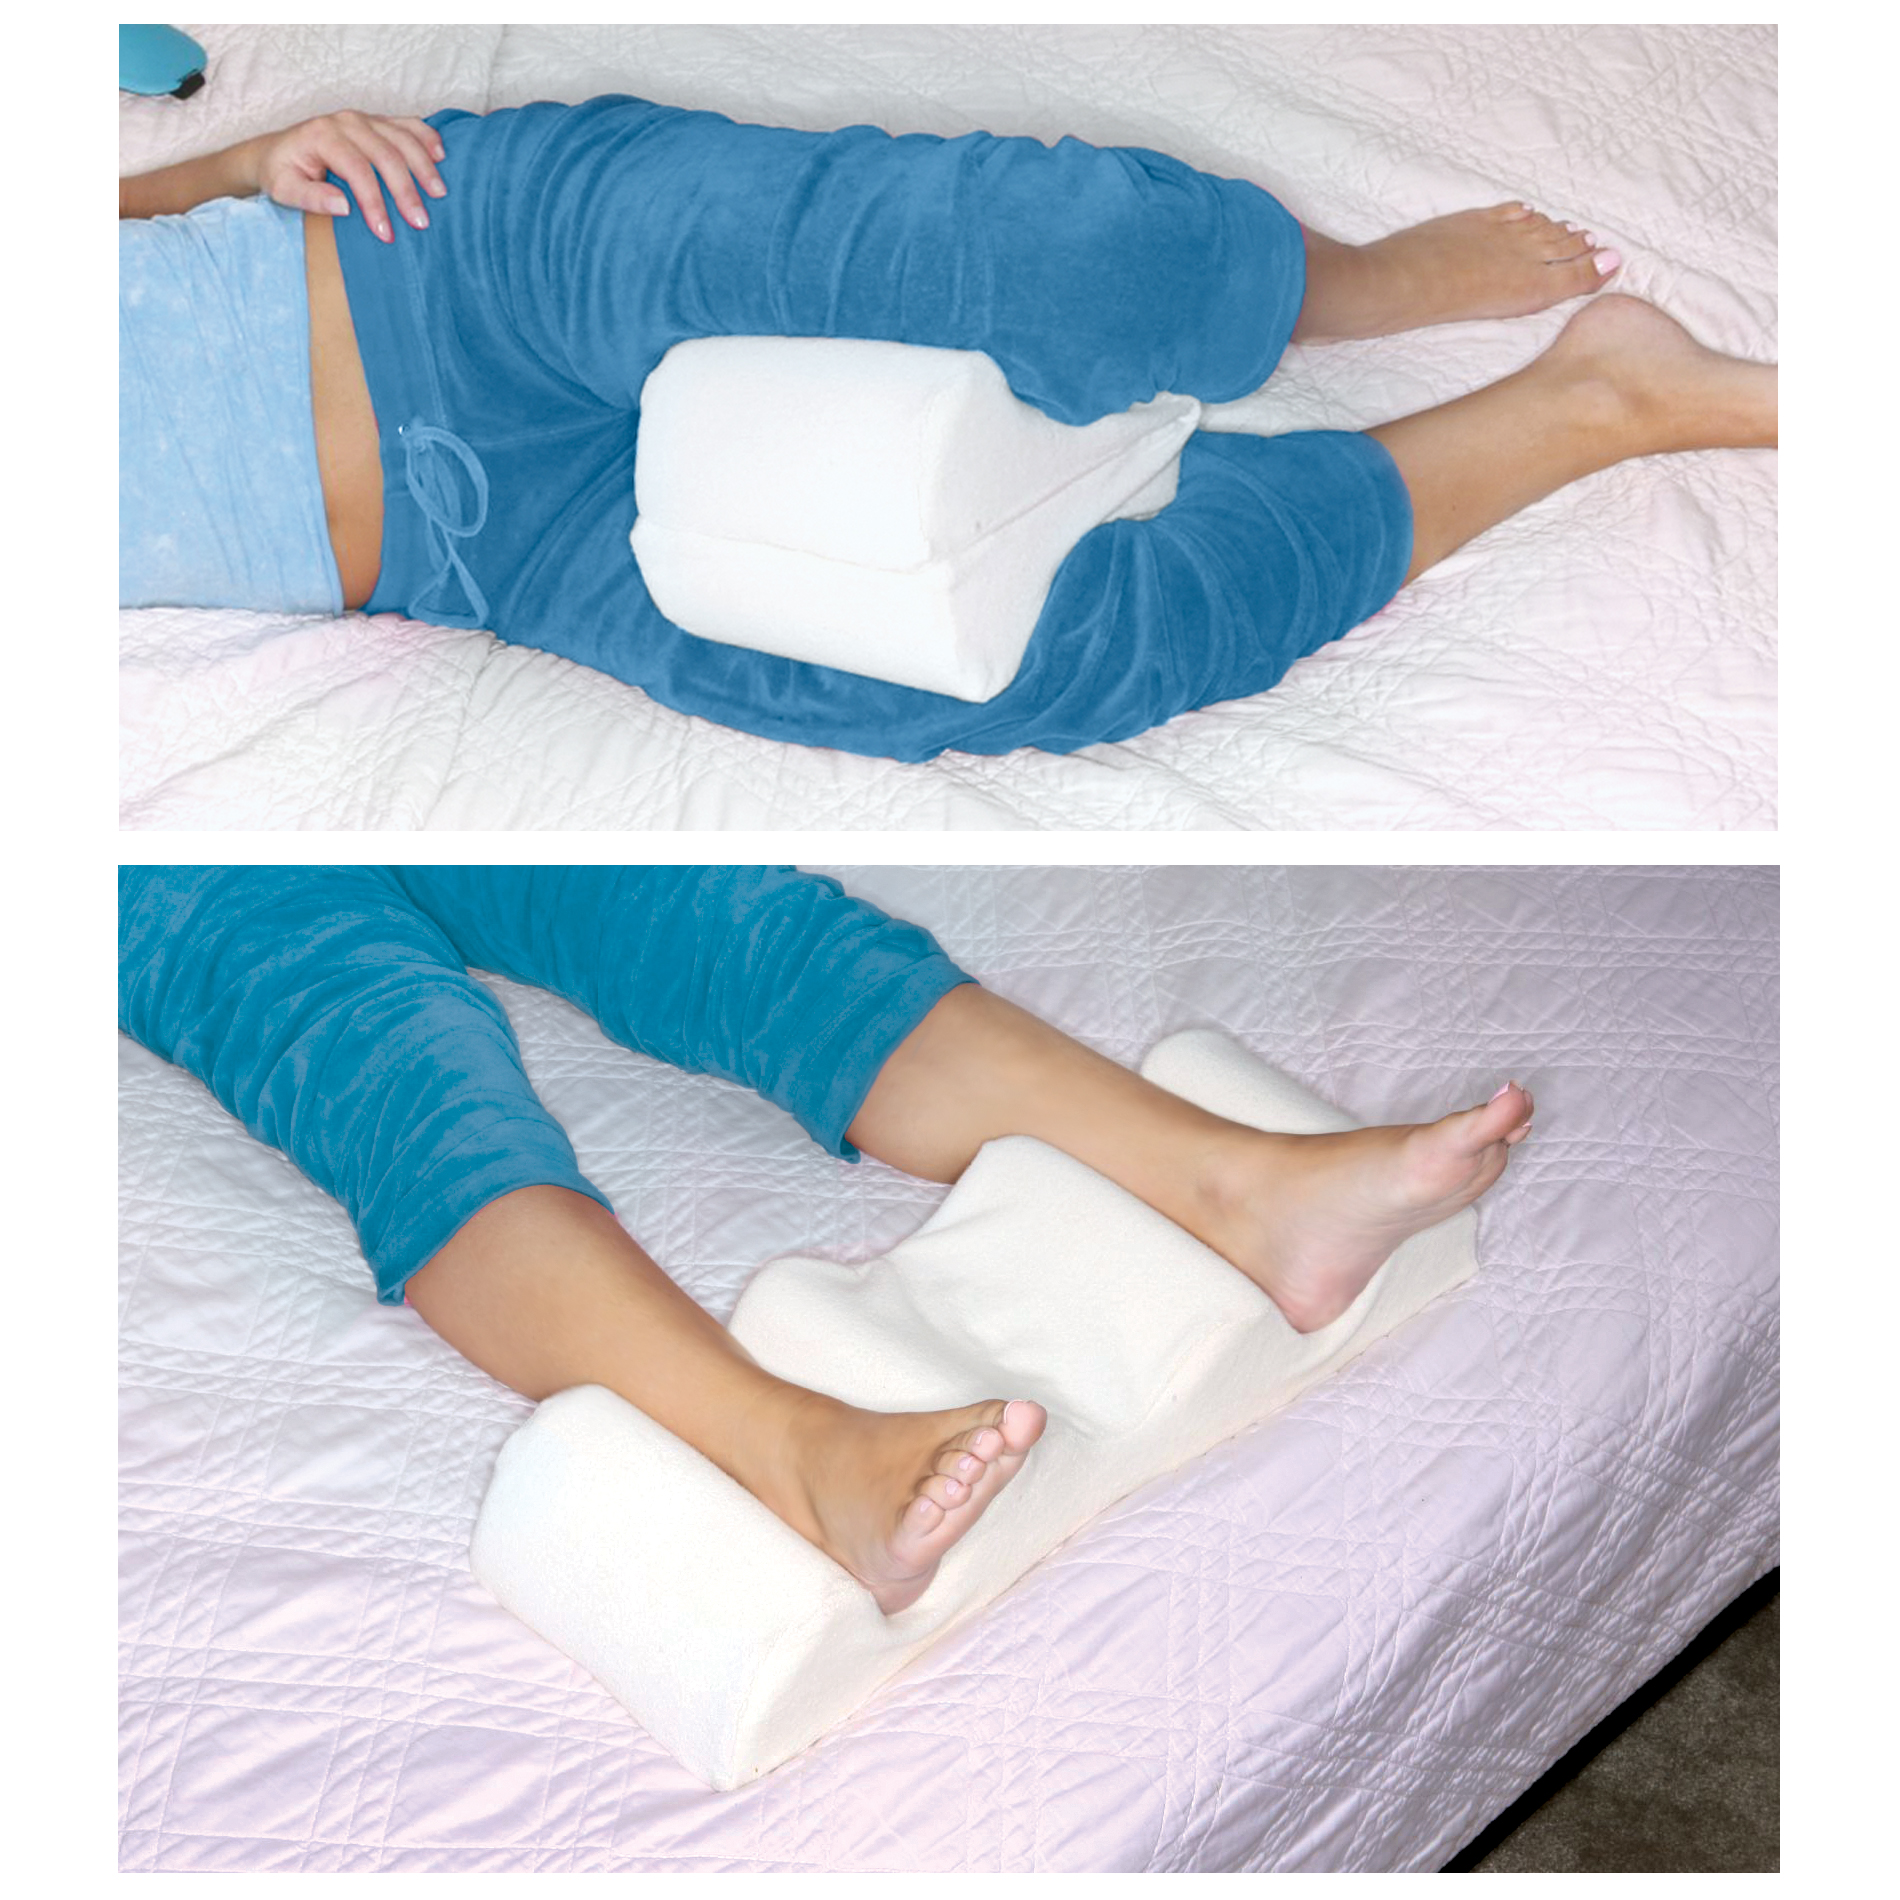 Better Sleep Pillow Leg Wedge Pillow - Best Memory Foam 2-in-1 Knee Pillows for Sleeping and Support for Legs